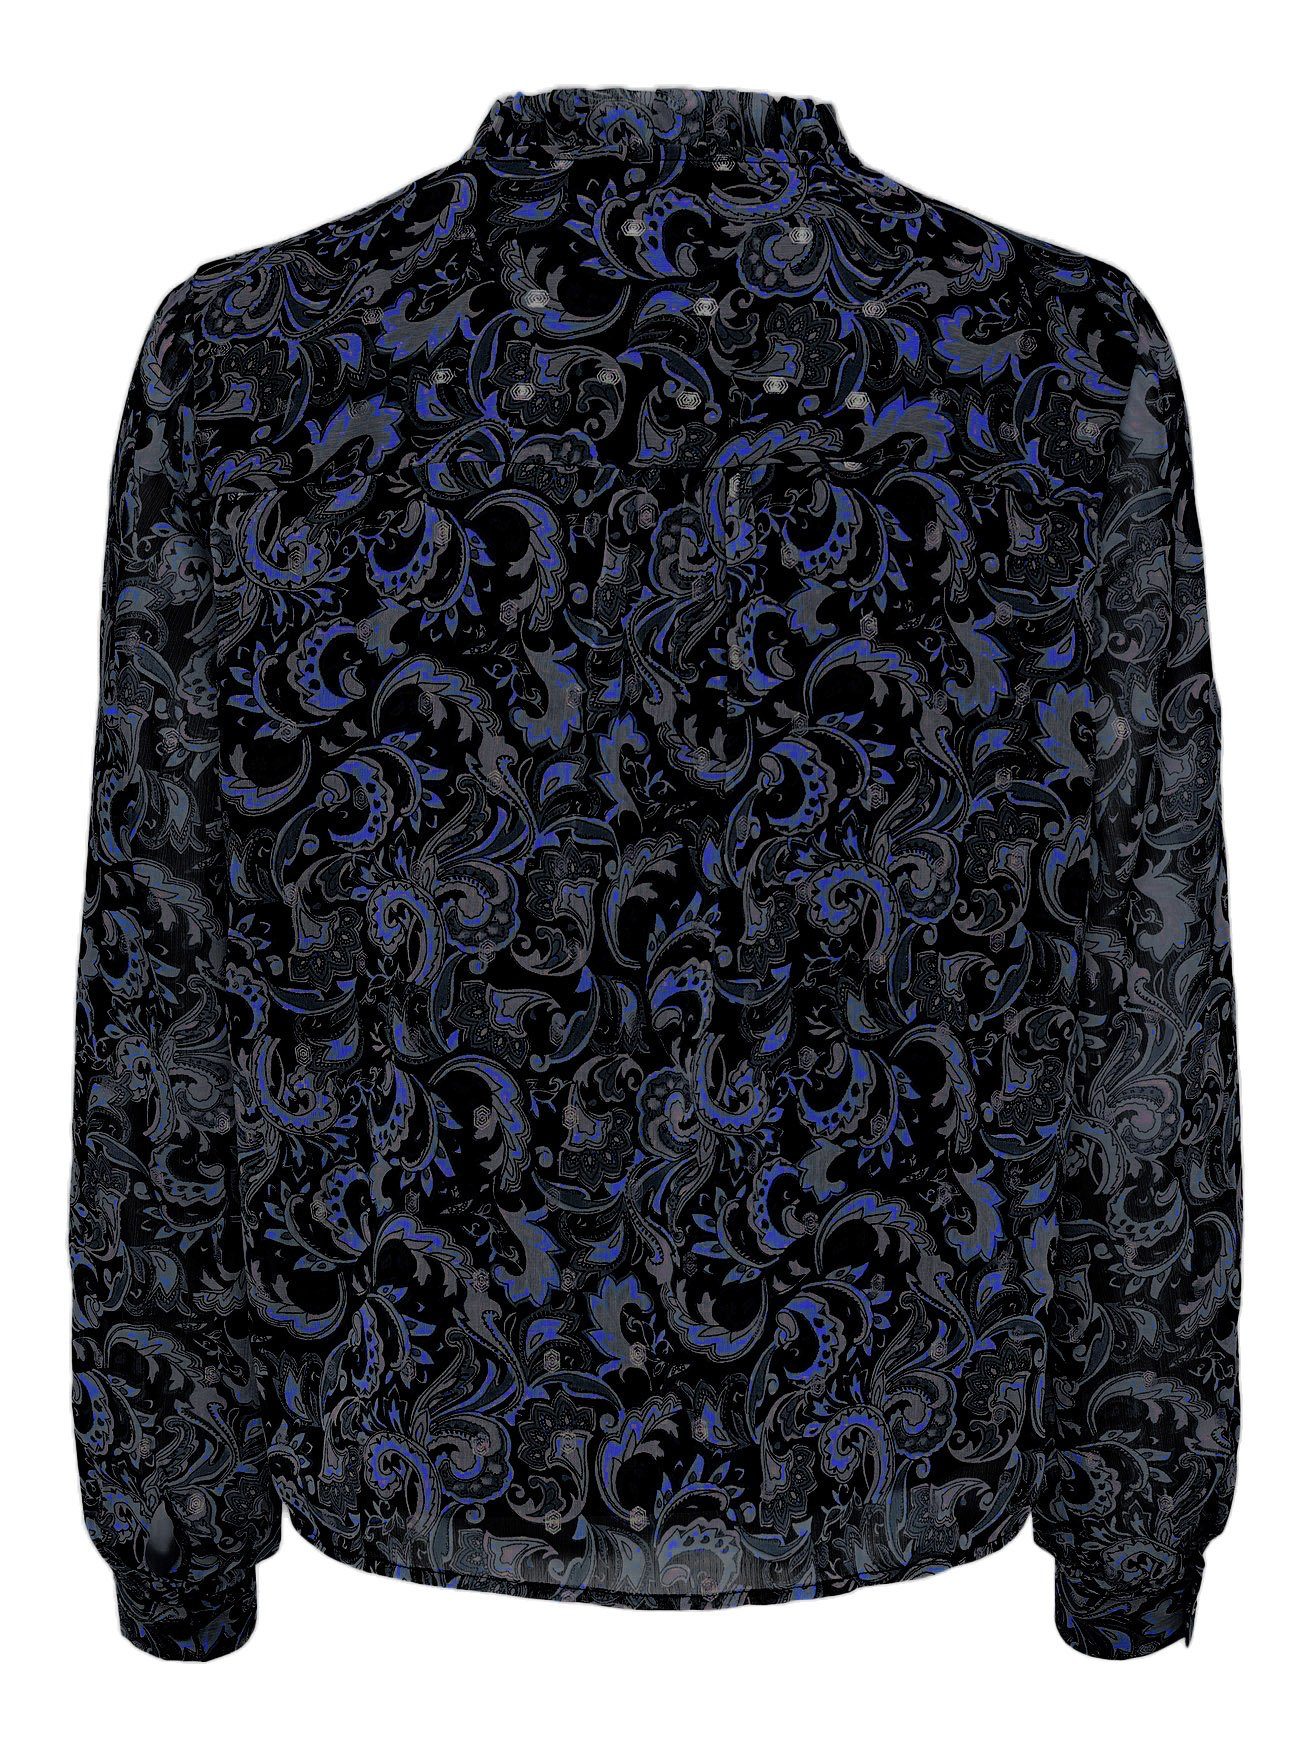 Muster JDYEMILY de Blusenshirt Top Paisley 4560 Blau V-Neck Langarm in Tunika Bluse YONG Print JACQUELINE